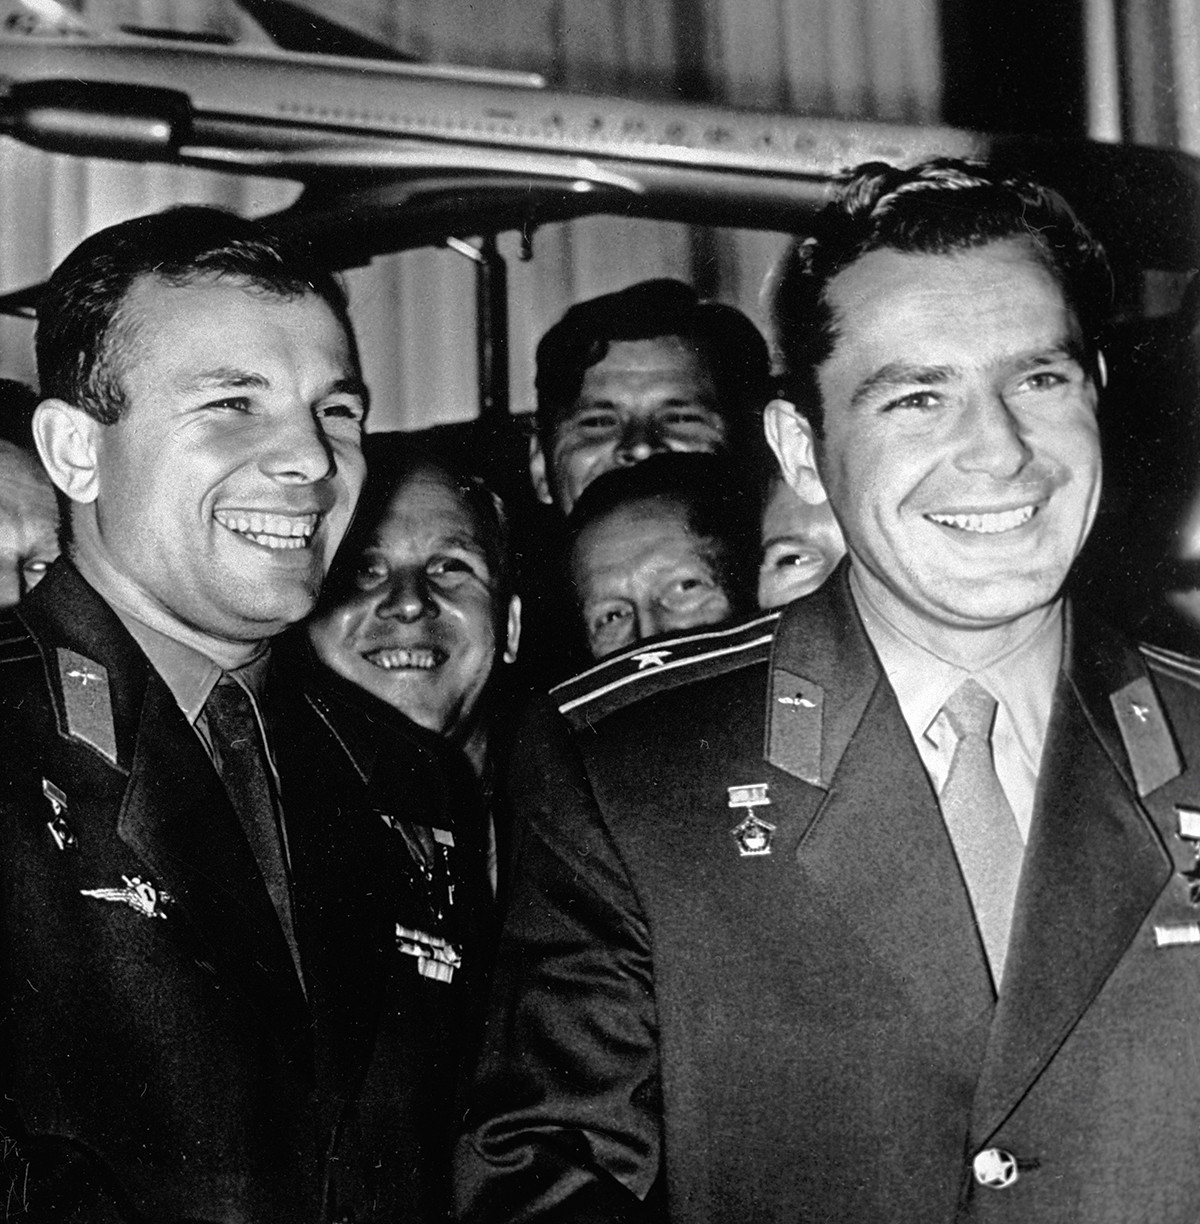 The two heroes, Yuri Gagarin and Gherman Titov, in 1961.